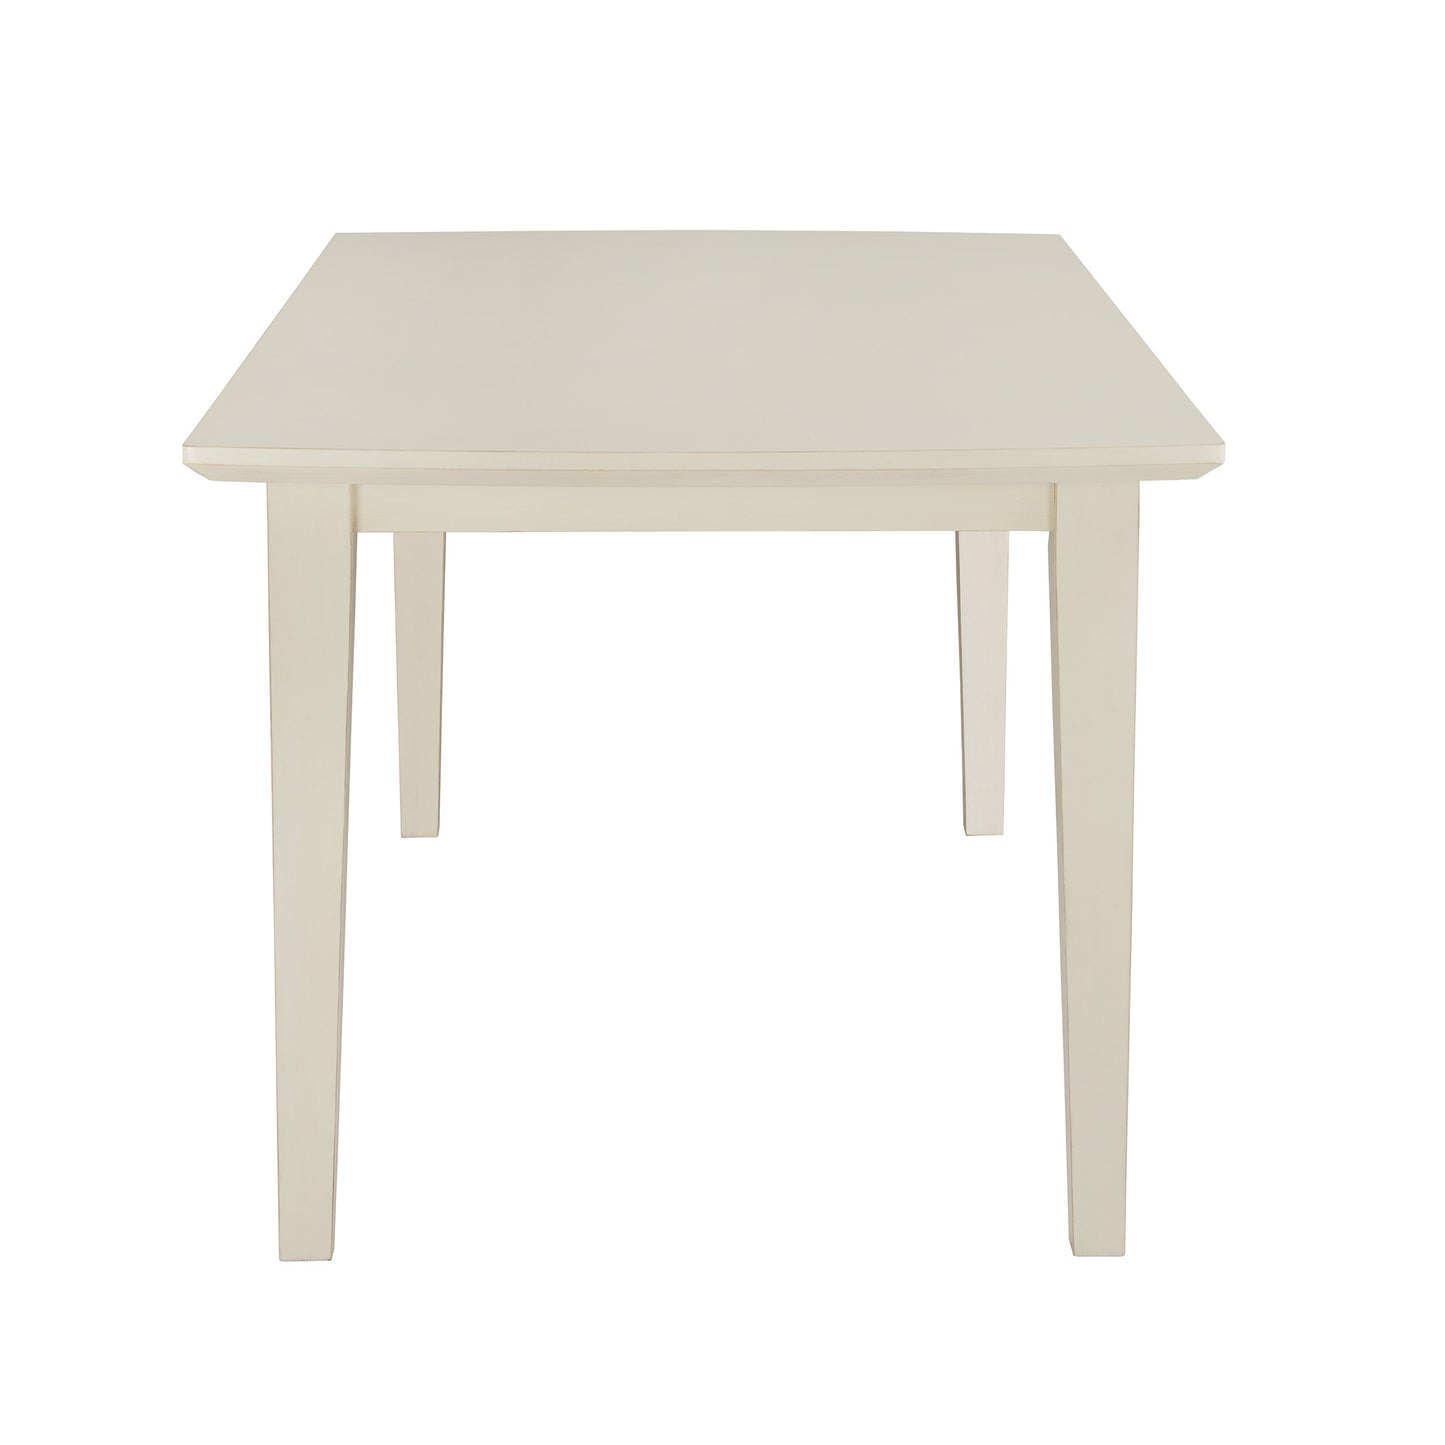 72" Rectangular Dining Table  - White Top